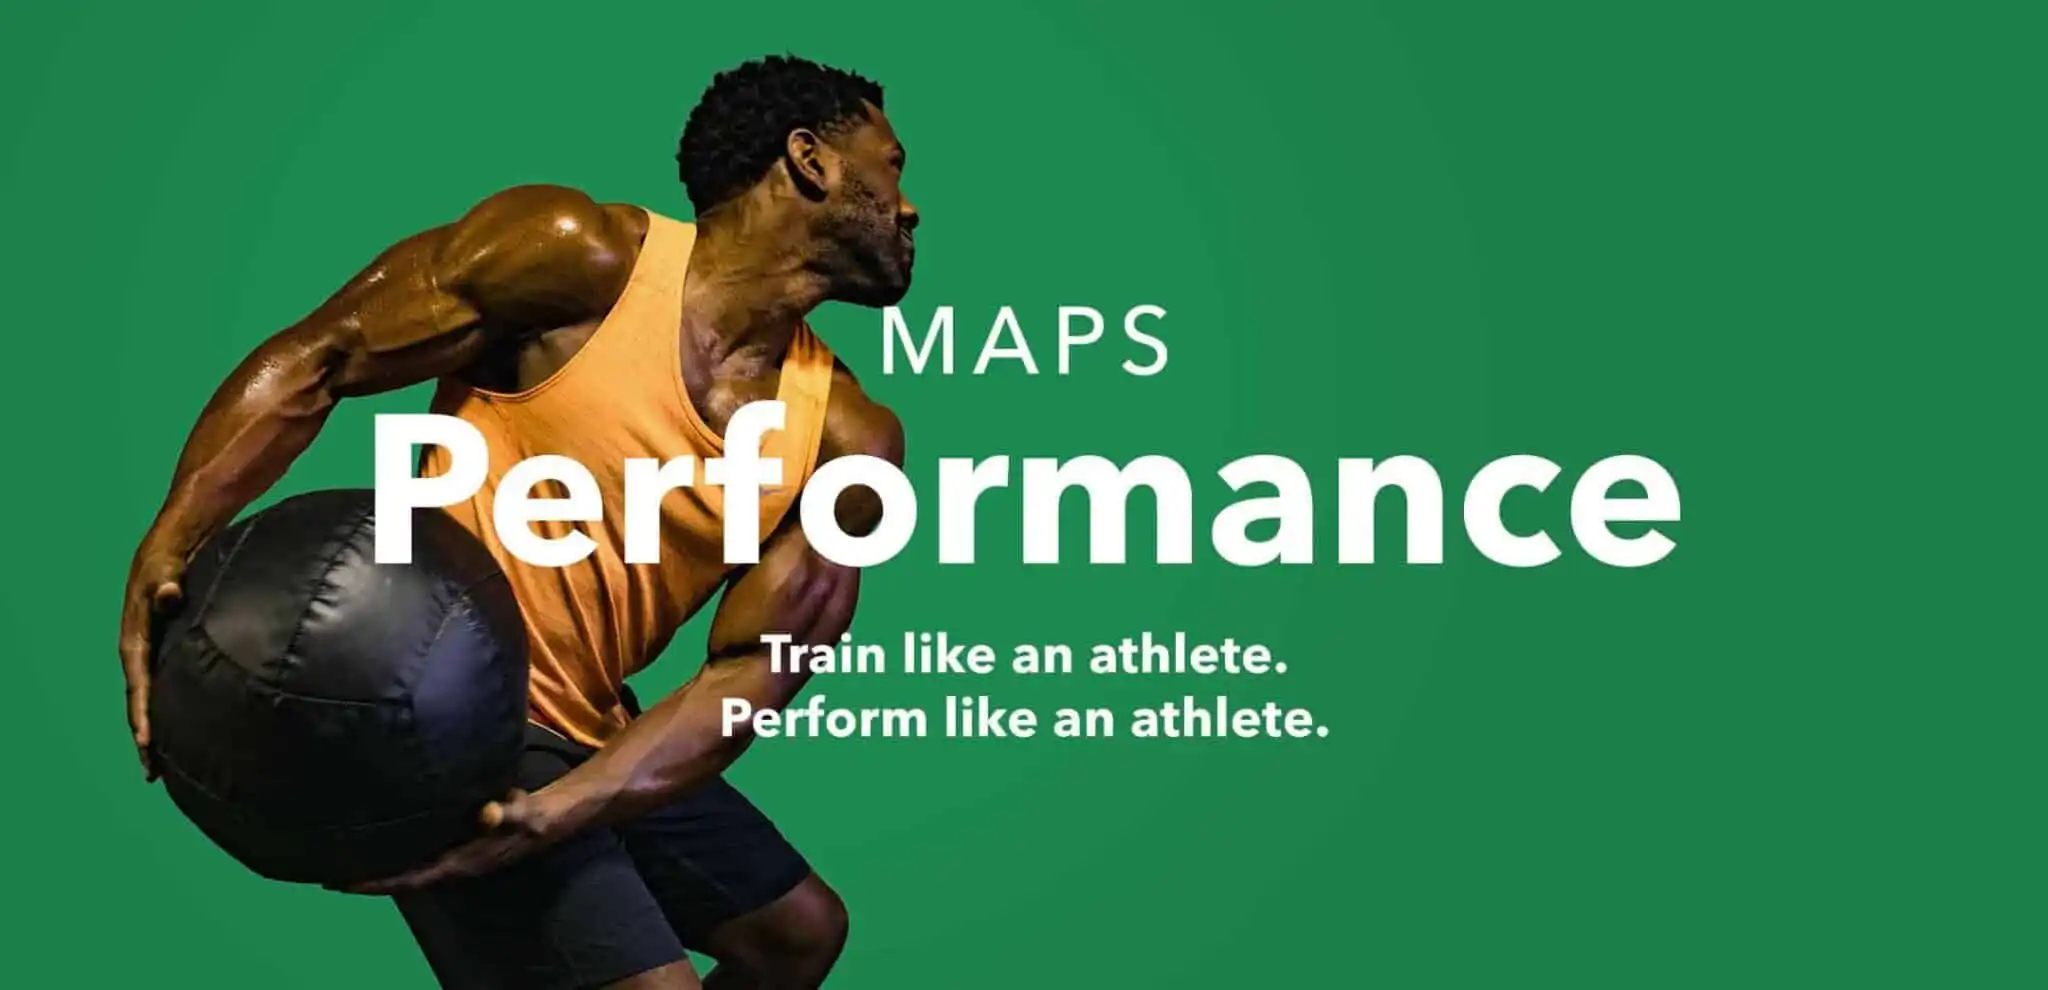 MAPS Performance